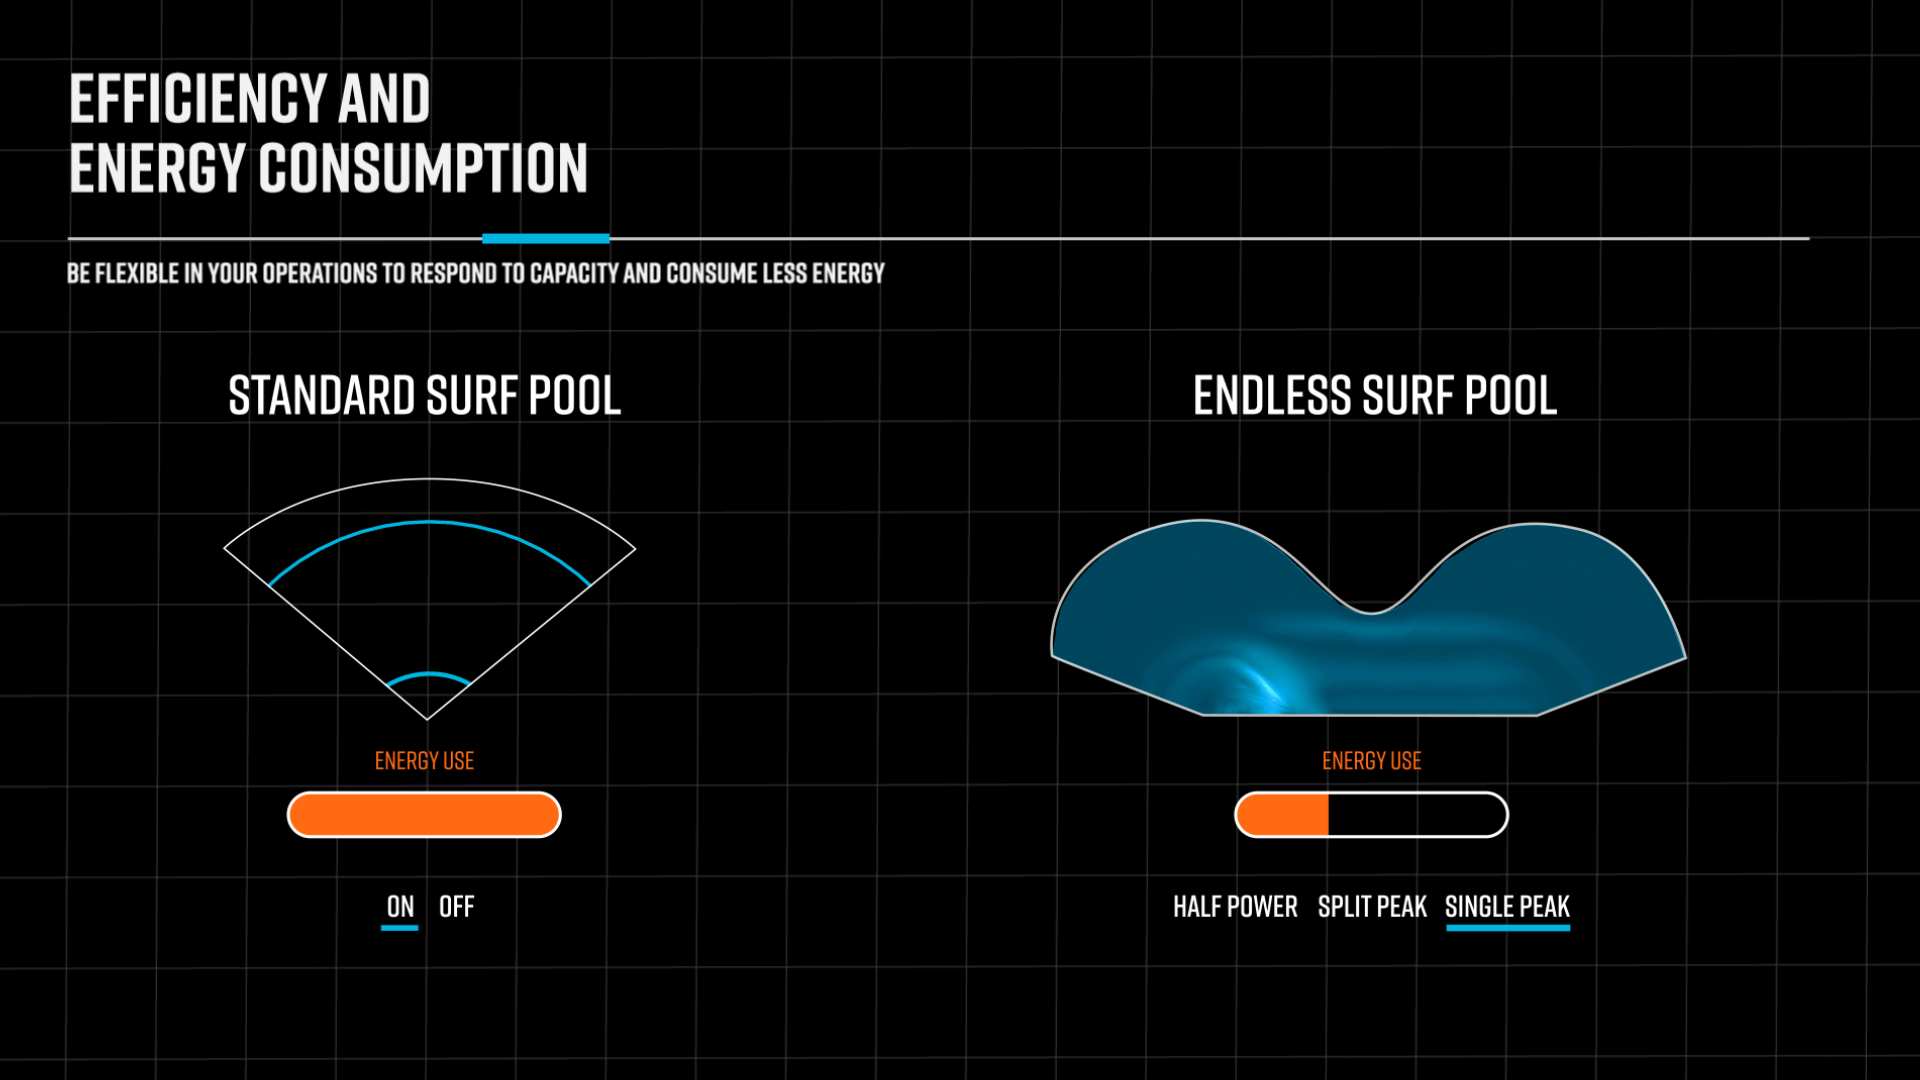 Wave pool energy consumption of Endless Surf vs. standard surf pools